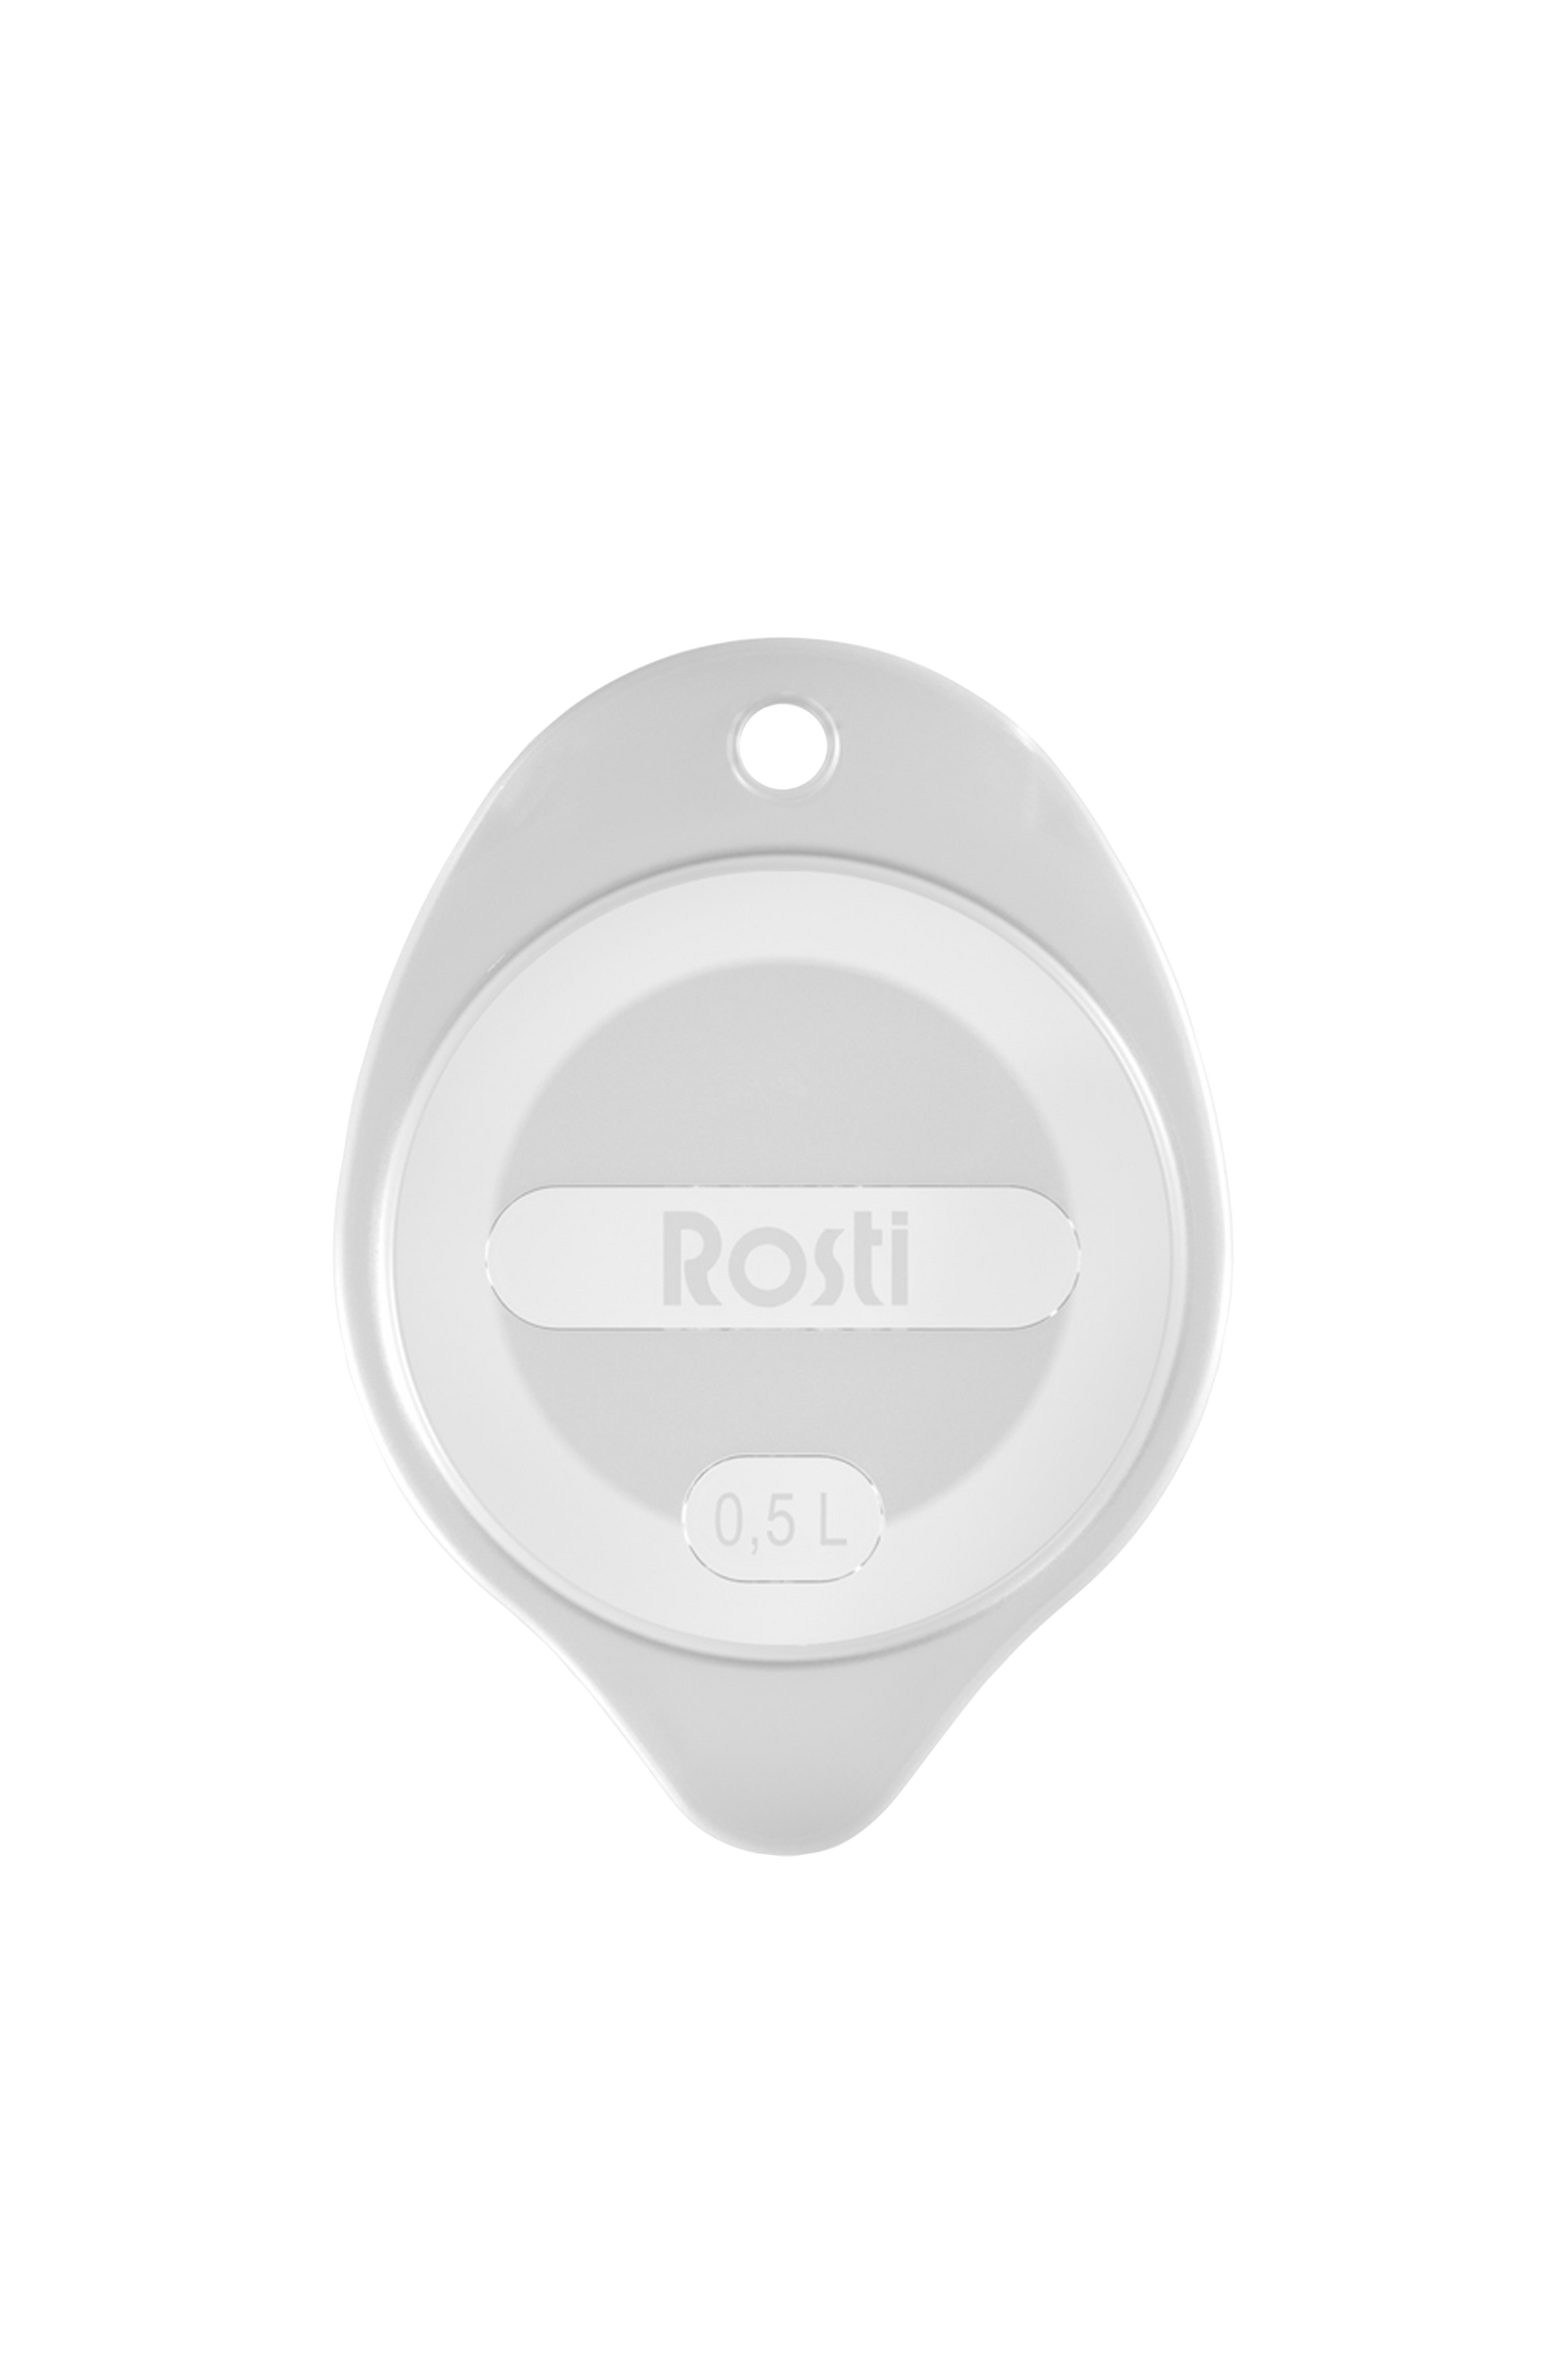 Rosti - Lock till mixkanna från Rosti 0,5 l - Transparent